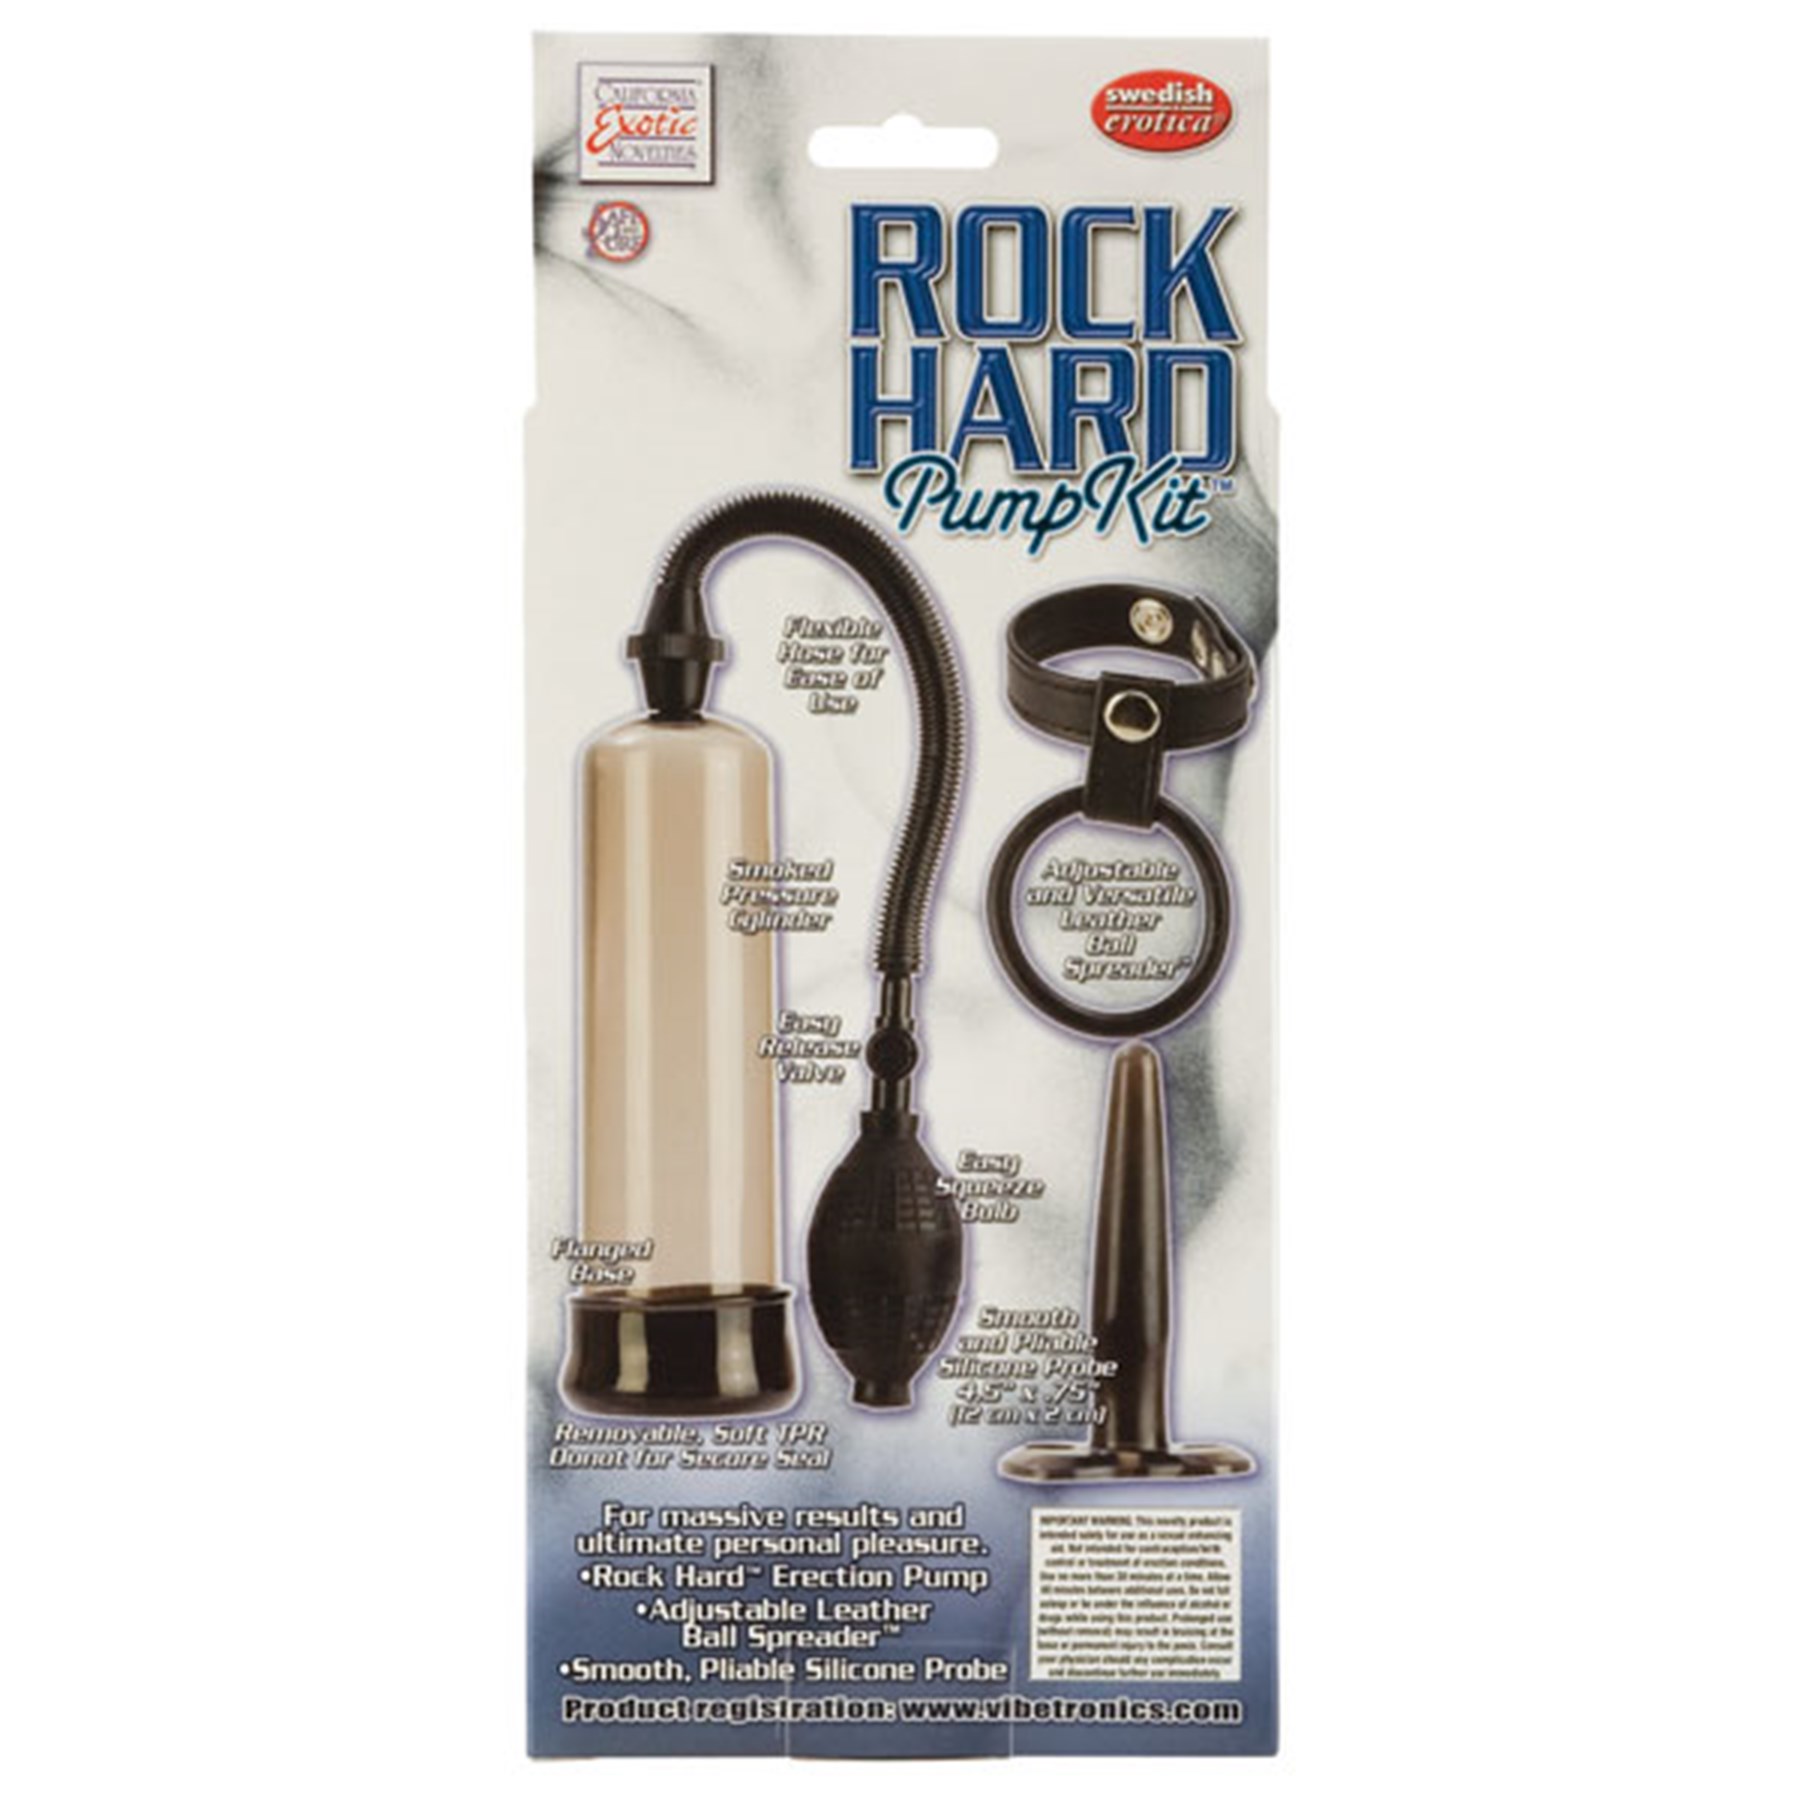 rock-hard-pump-kit